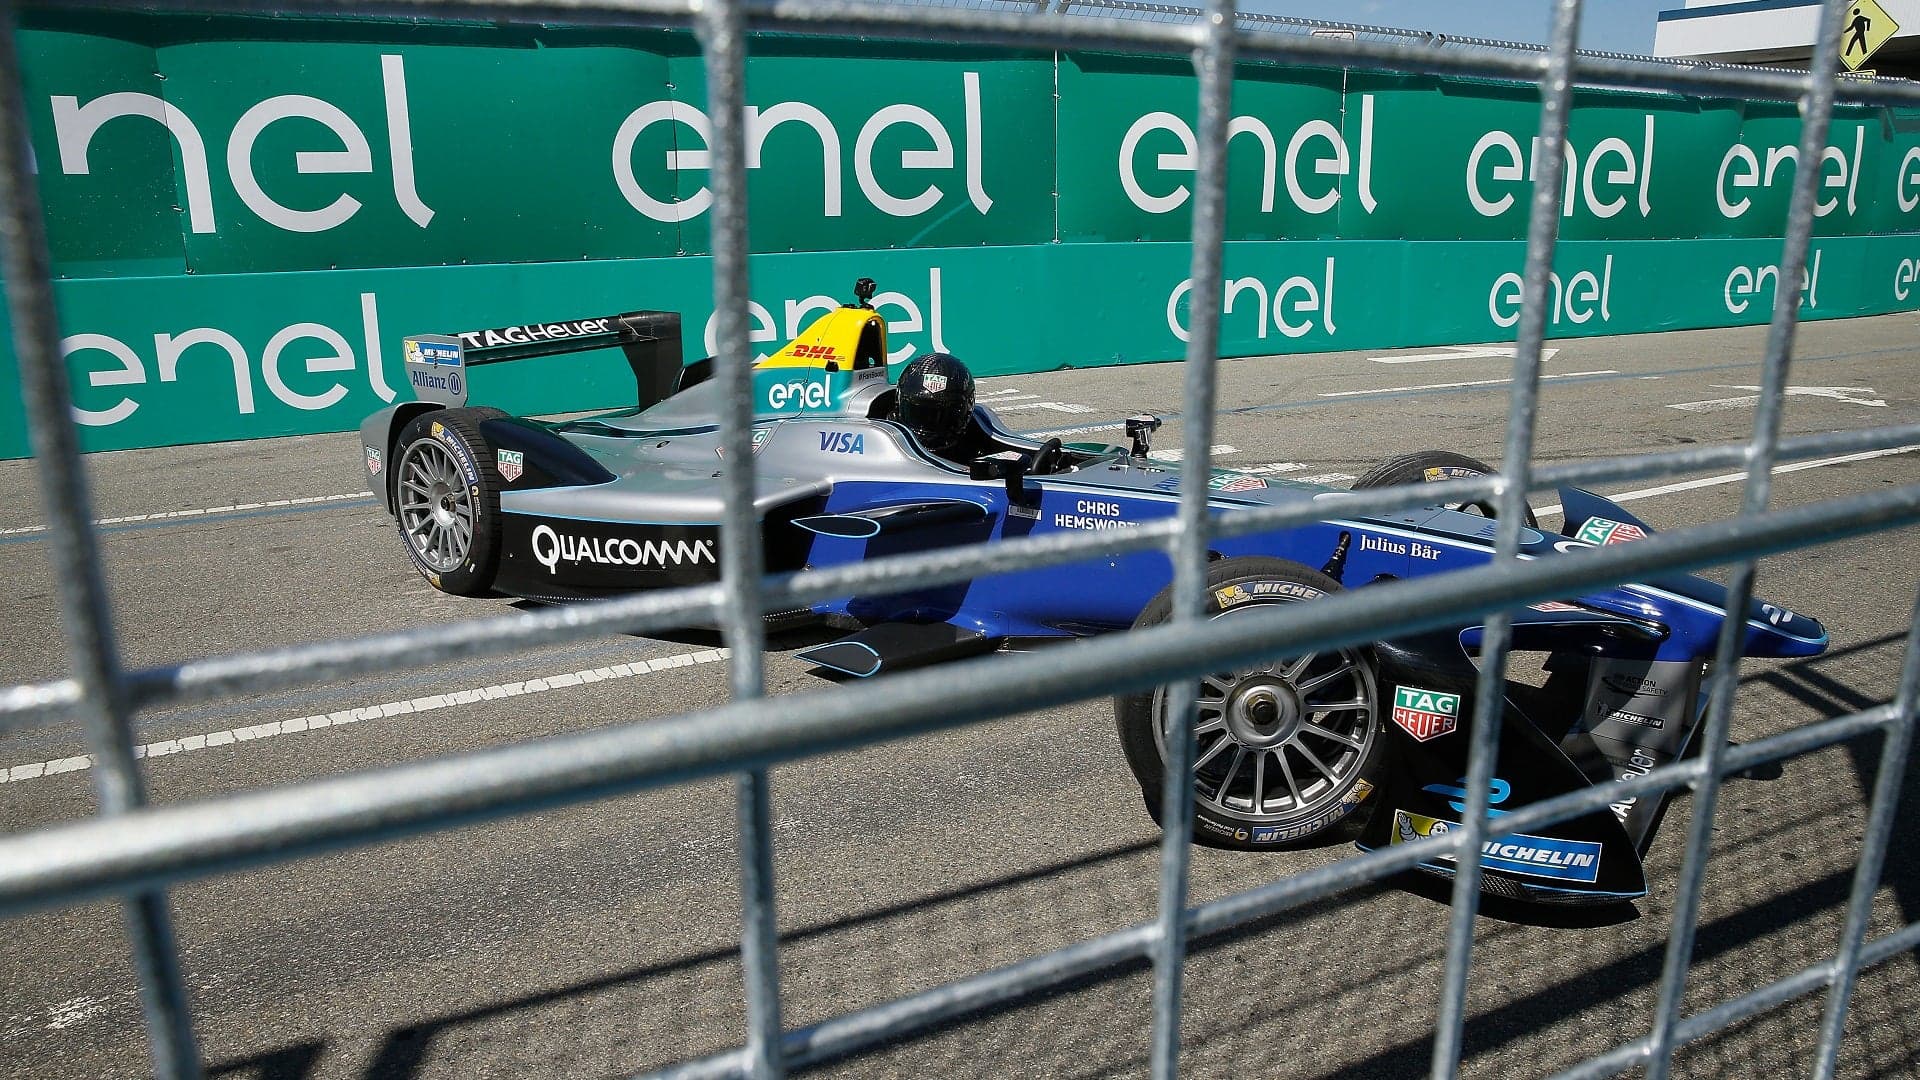 Chris Hemsworth Spins a Formula E Race Car in New York